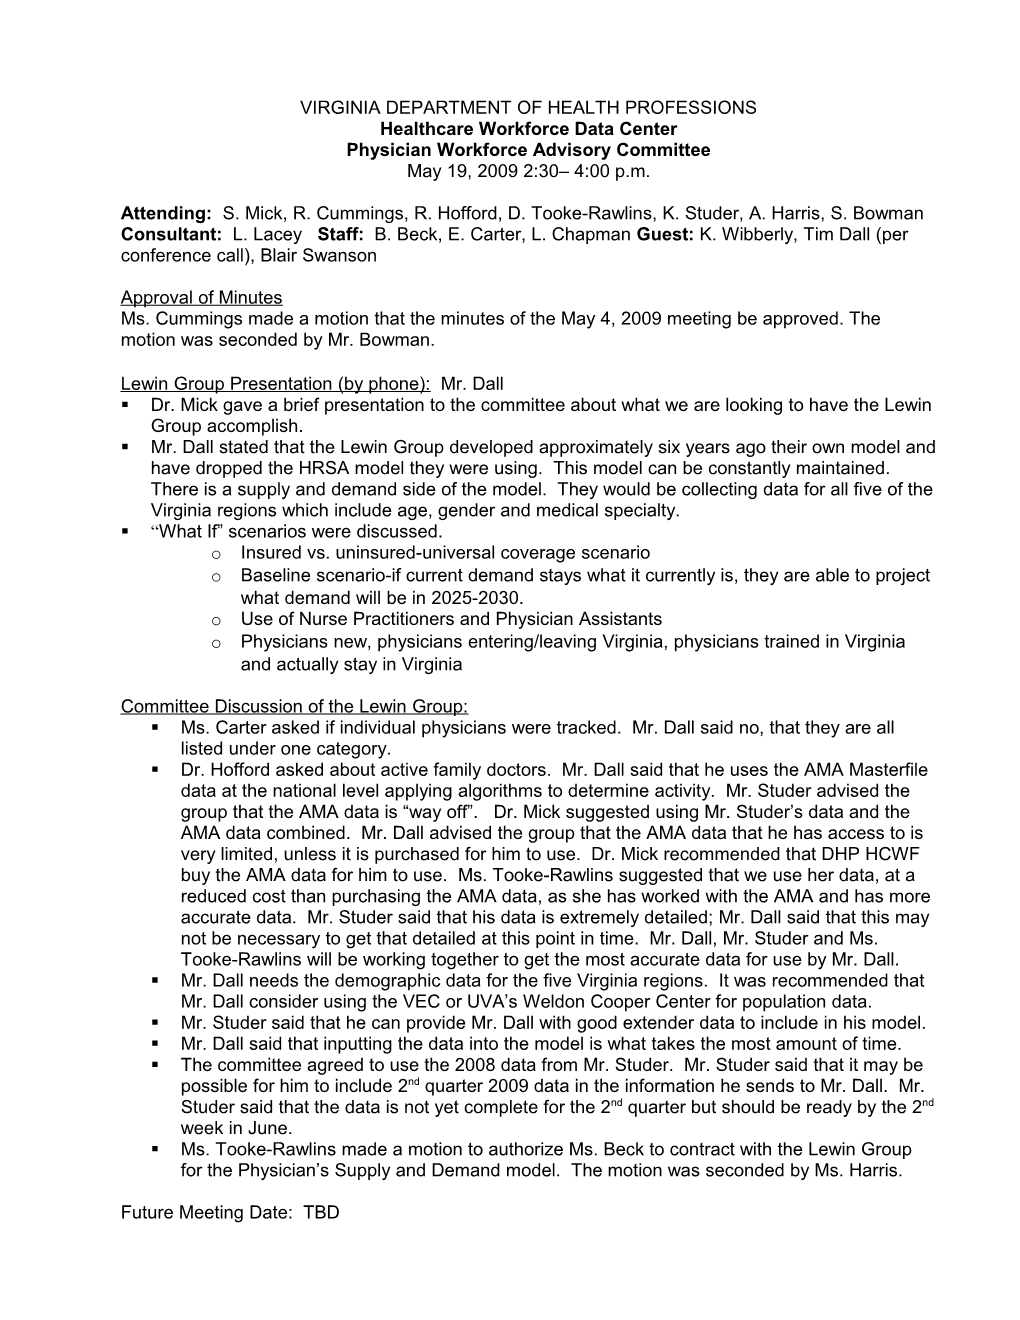 Workforce Advisory Committee Minutes 5-19-2009